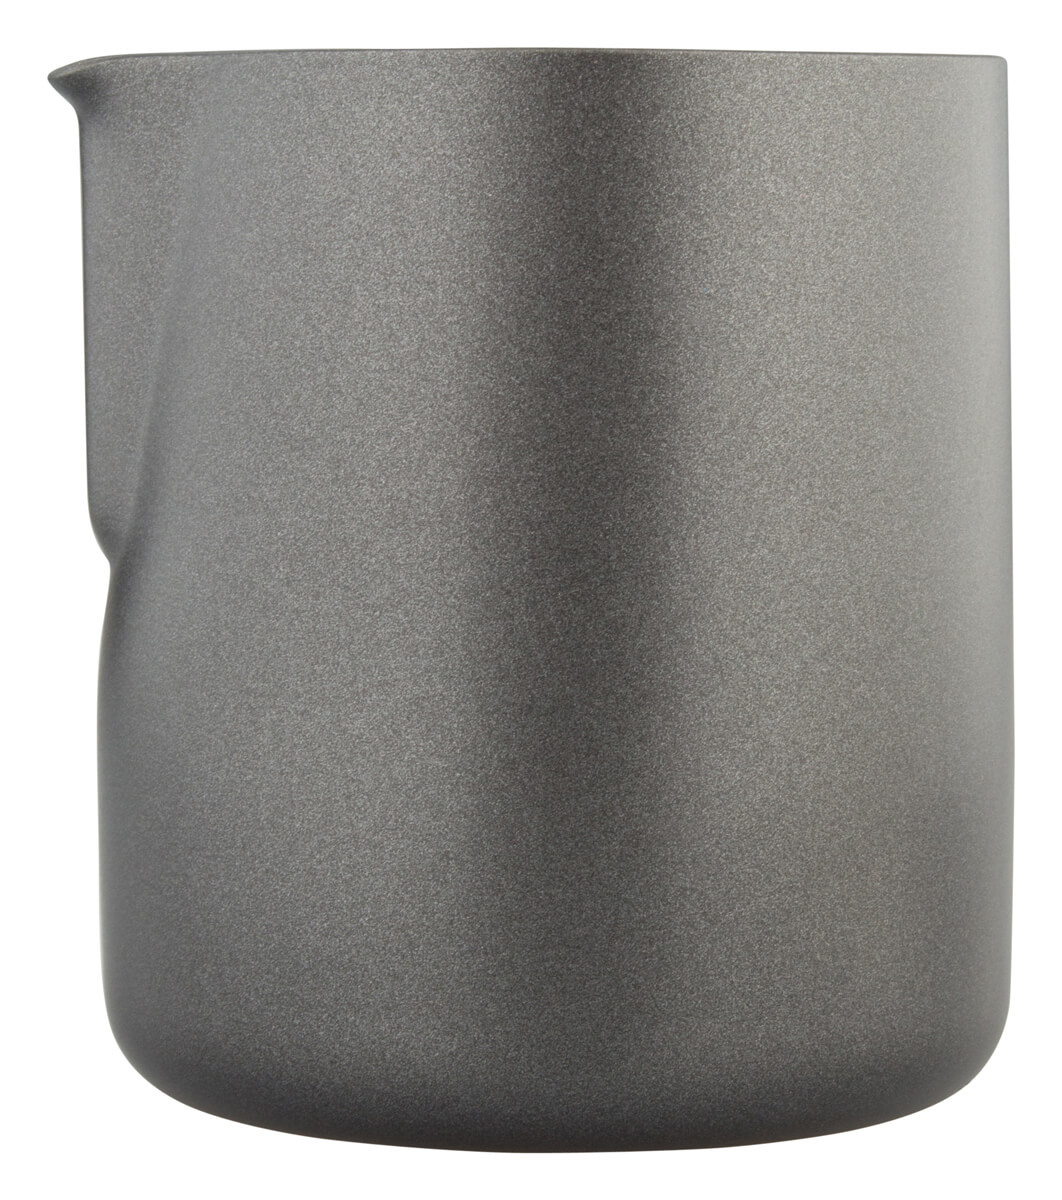 Mini Milk Jug, non-stick coating, black - 150ml